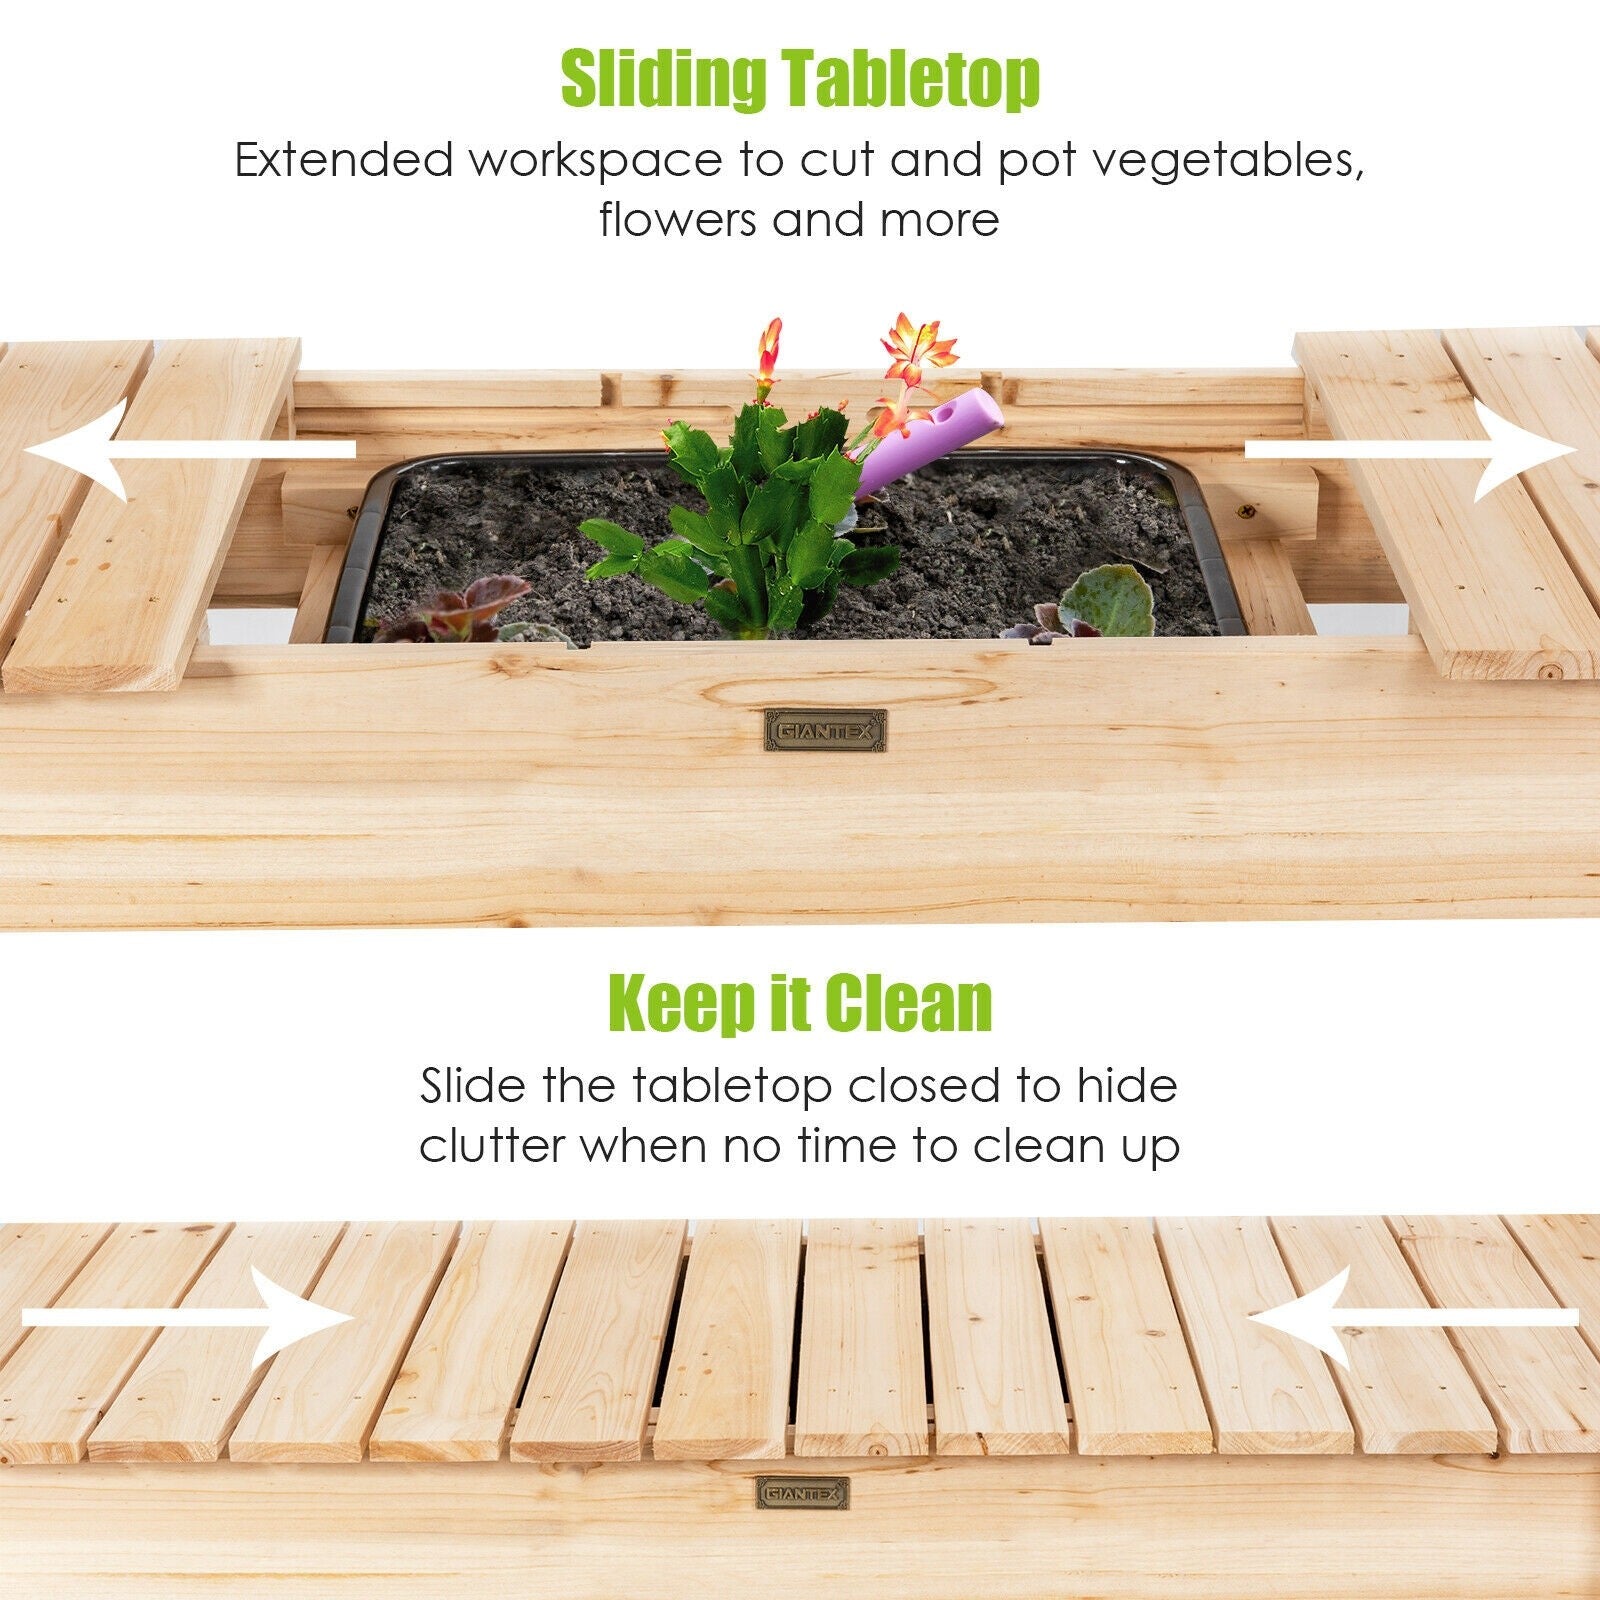 Giantex Garden Potting Bench, Outdoor Wood Work Table w/Sliding Tabletop